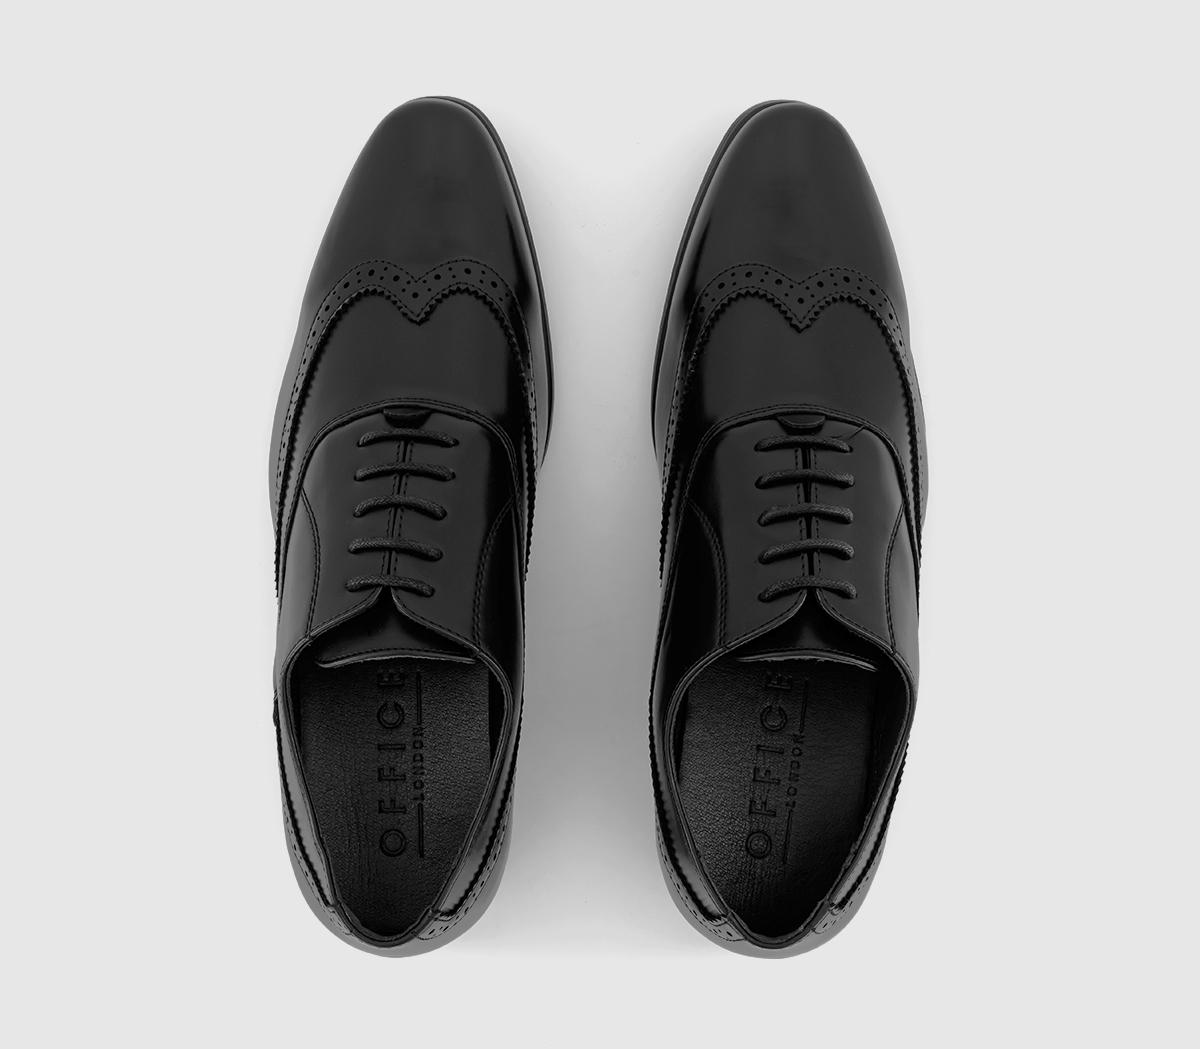 OFFICE Martel Wingtip Oxford Shoes Black - Men’s Smart Shoes